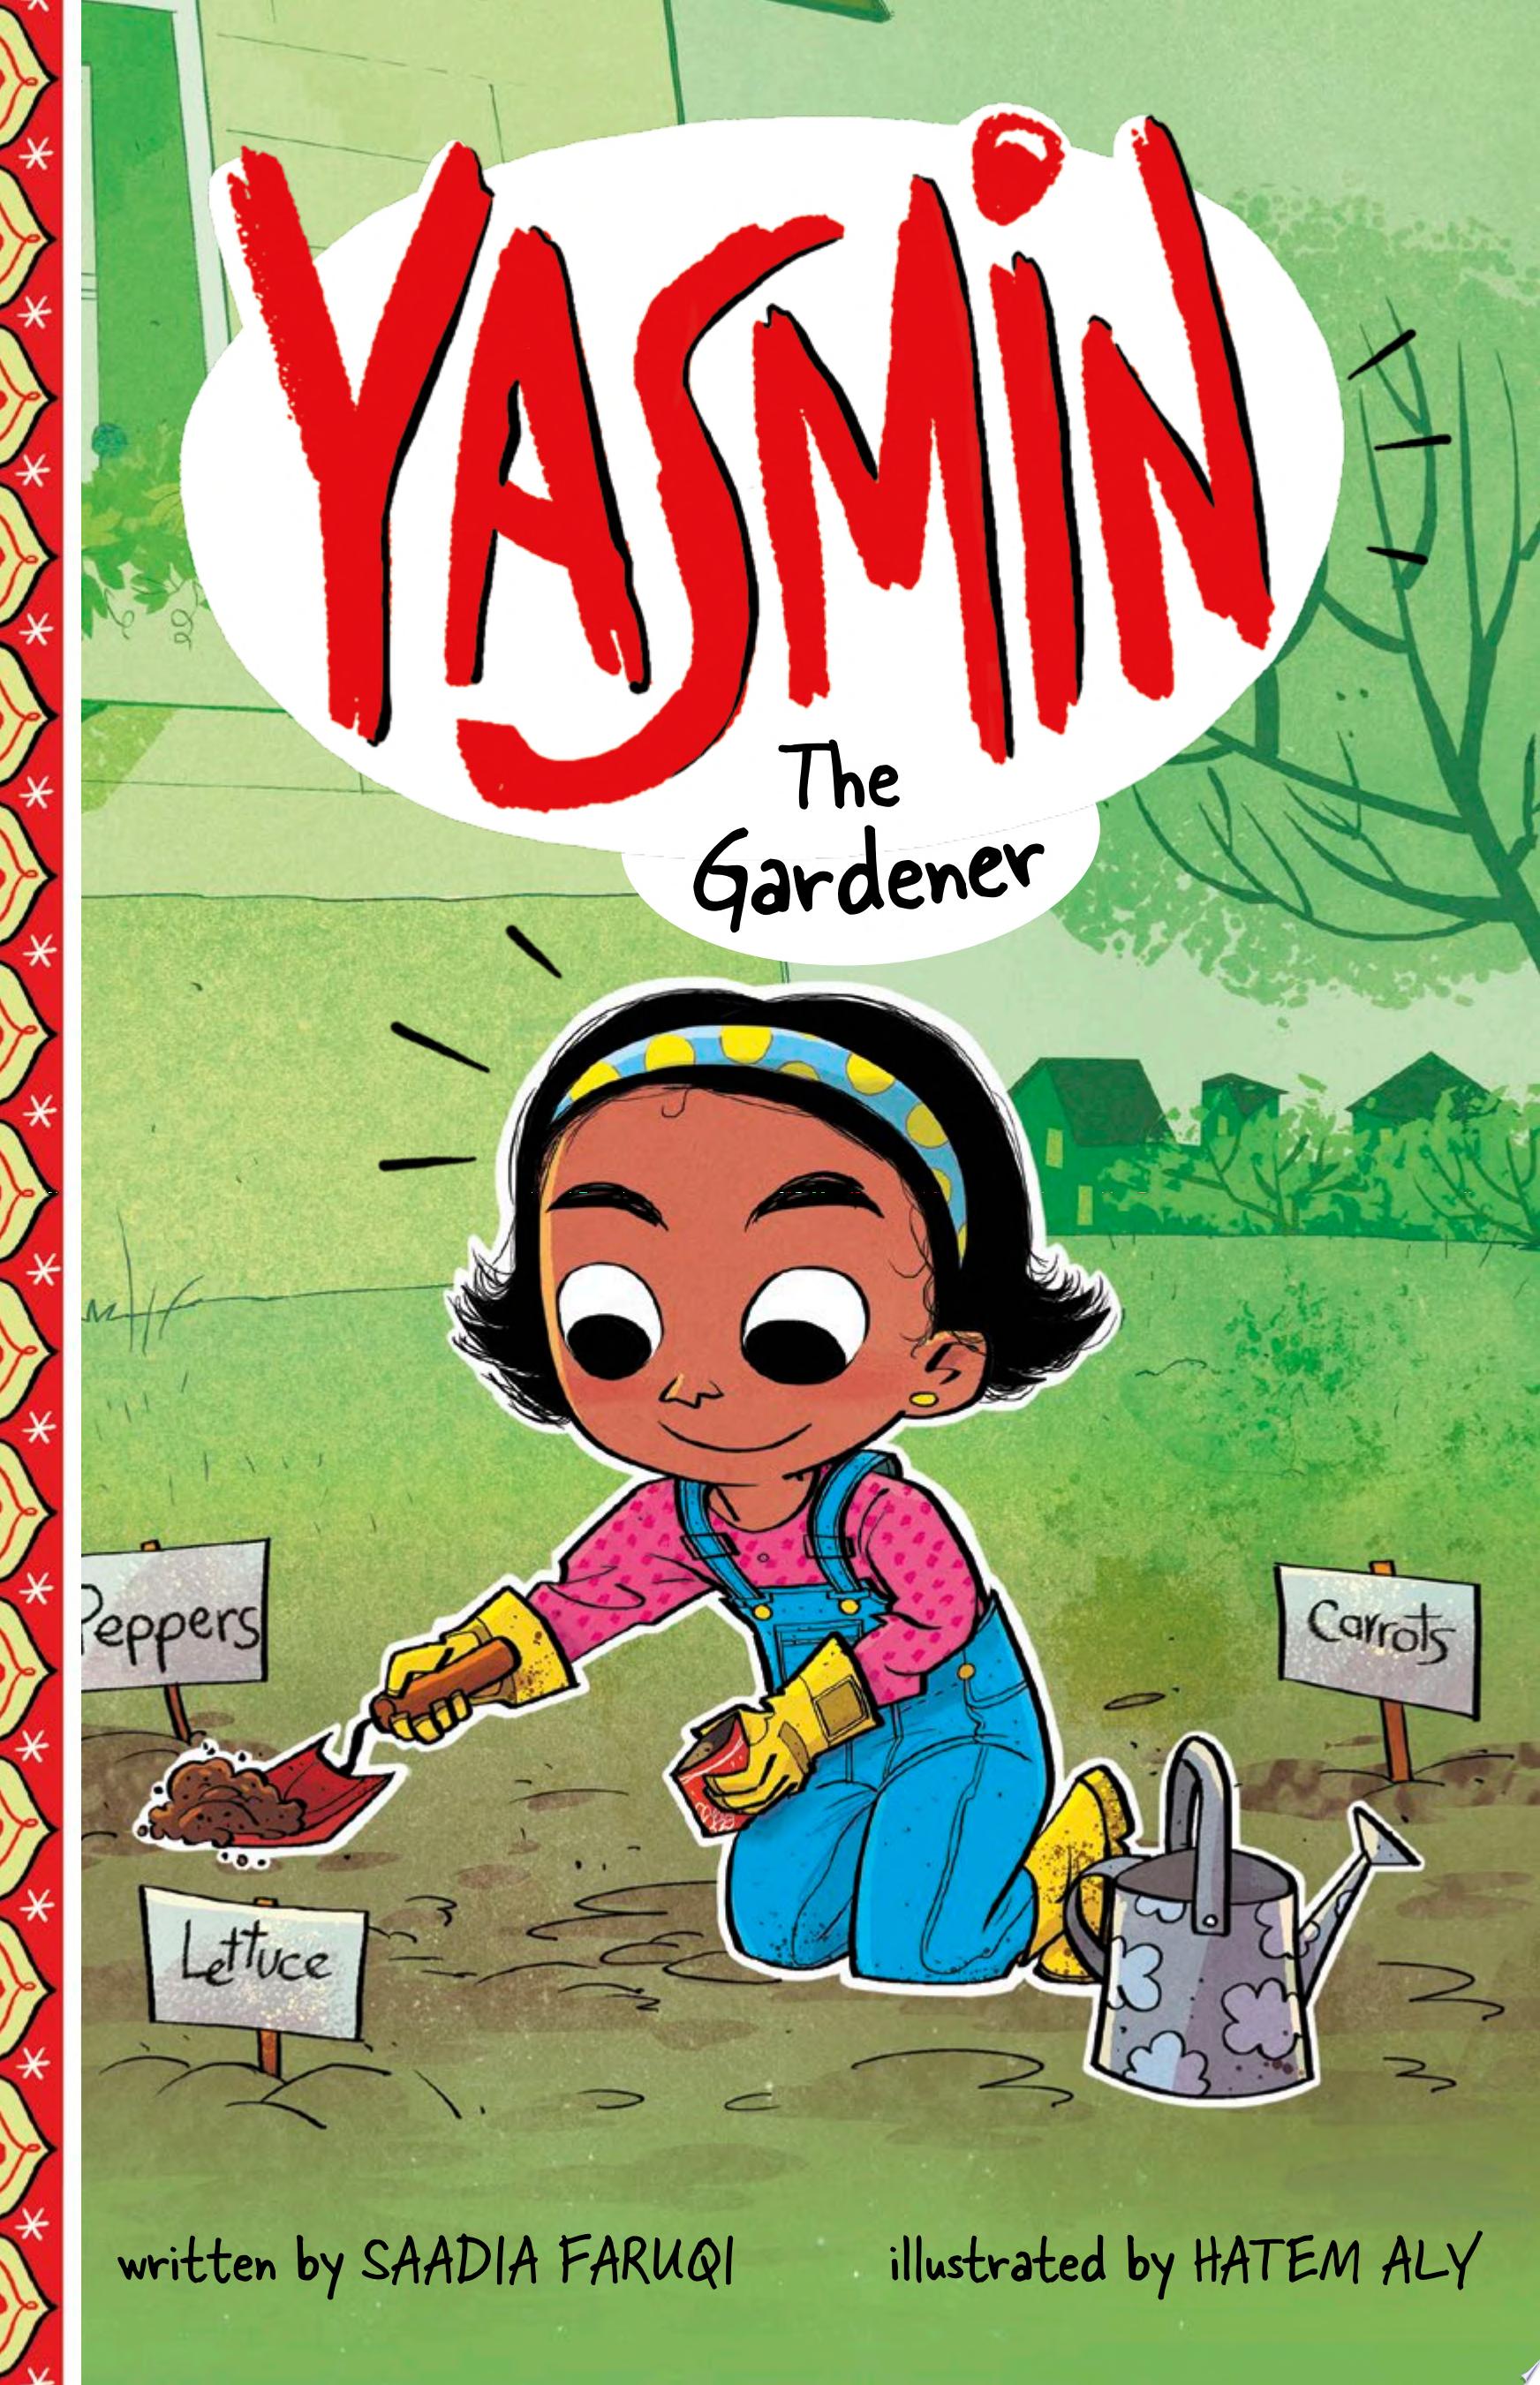 Image for "Yasmin the Gardener"